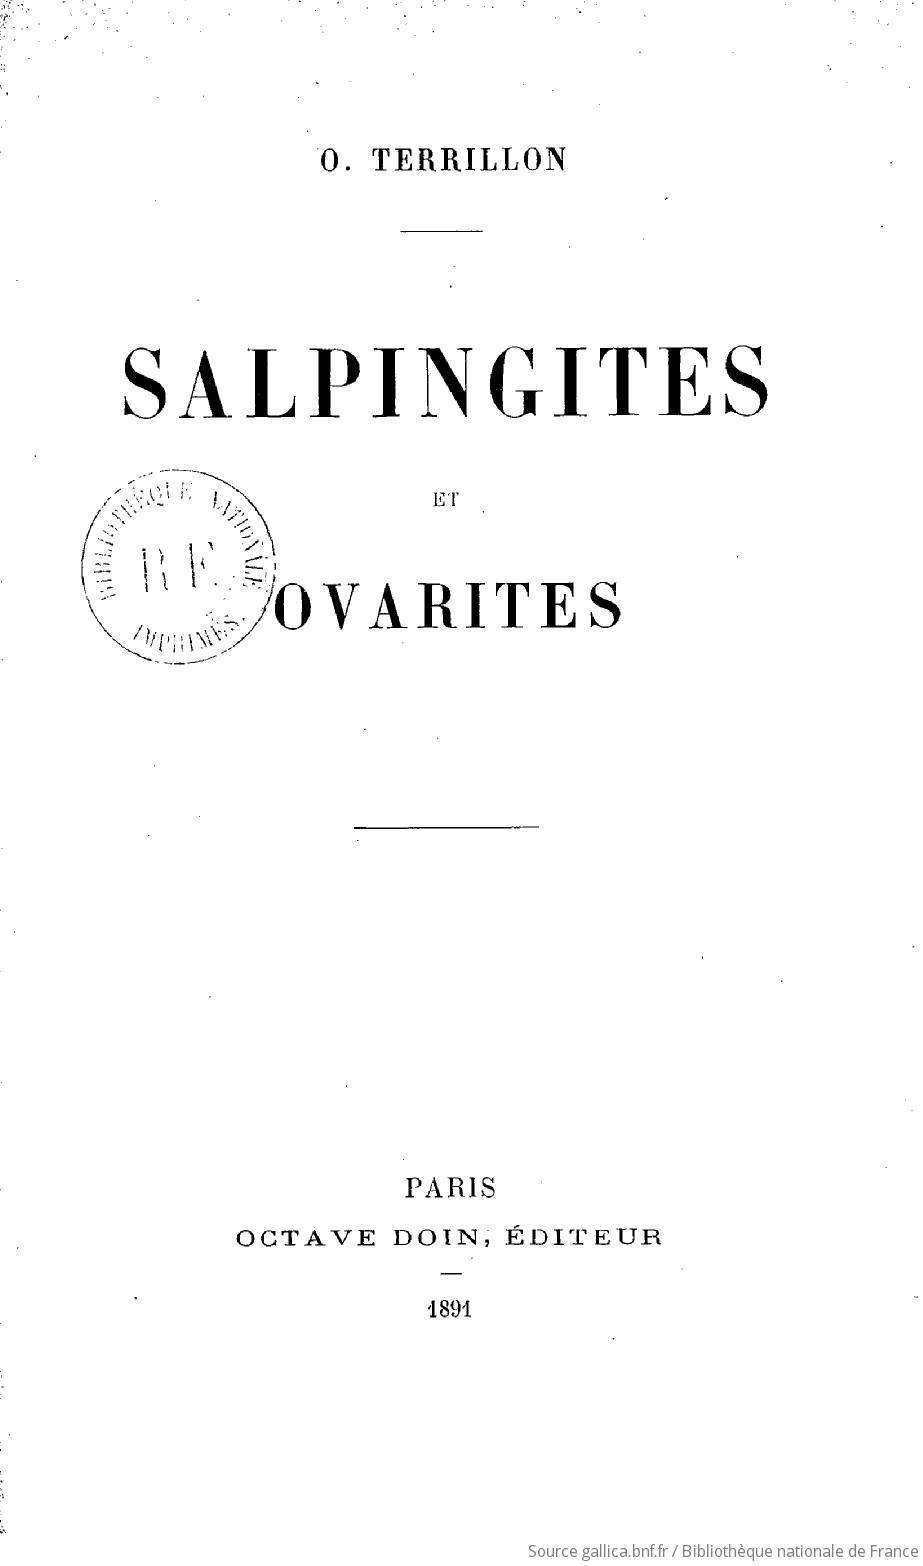 Salpingites et ovarites / O. Terrillon | Gallica